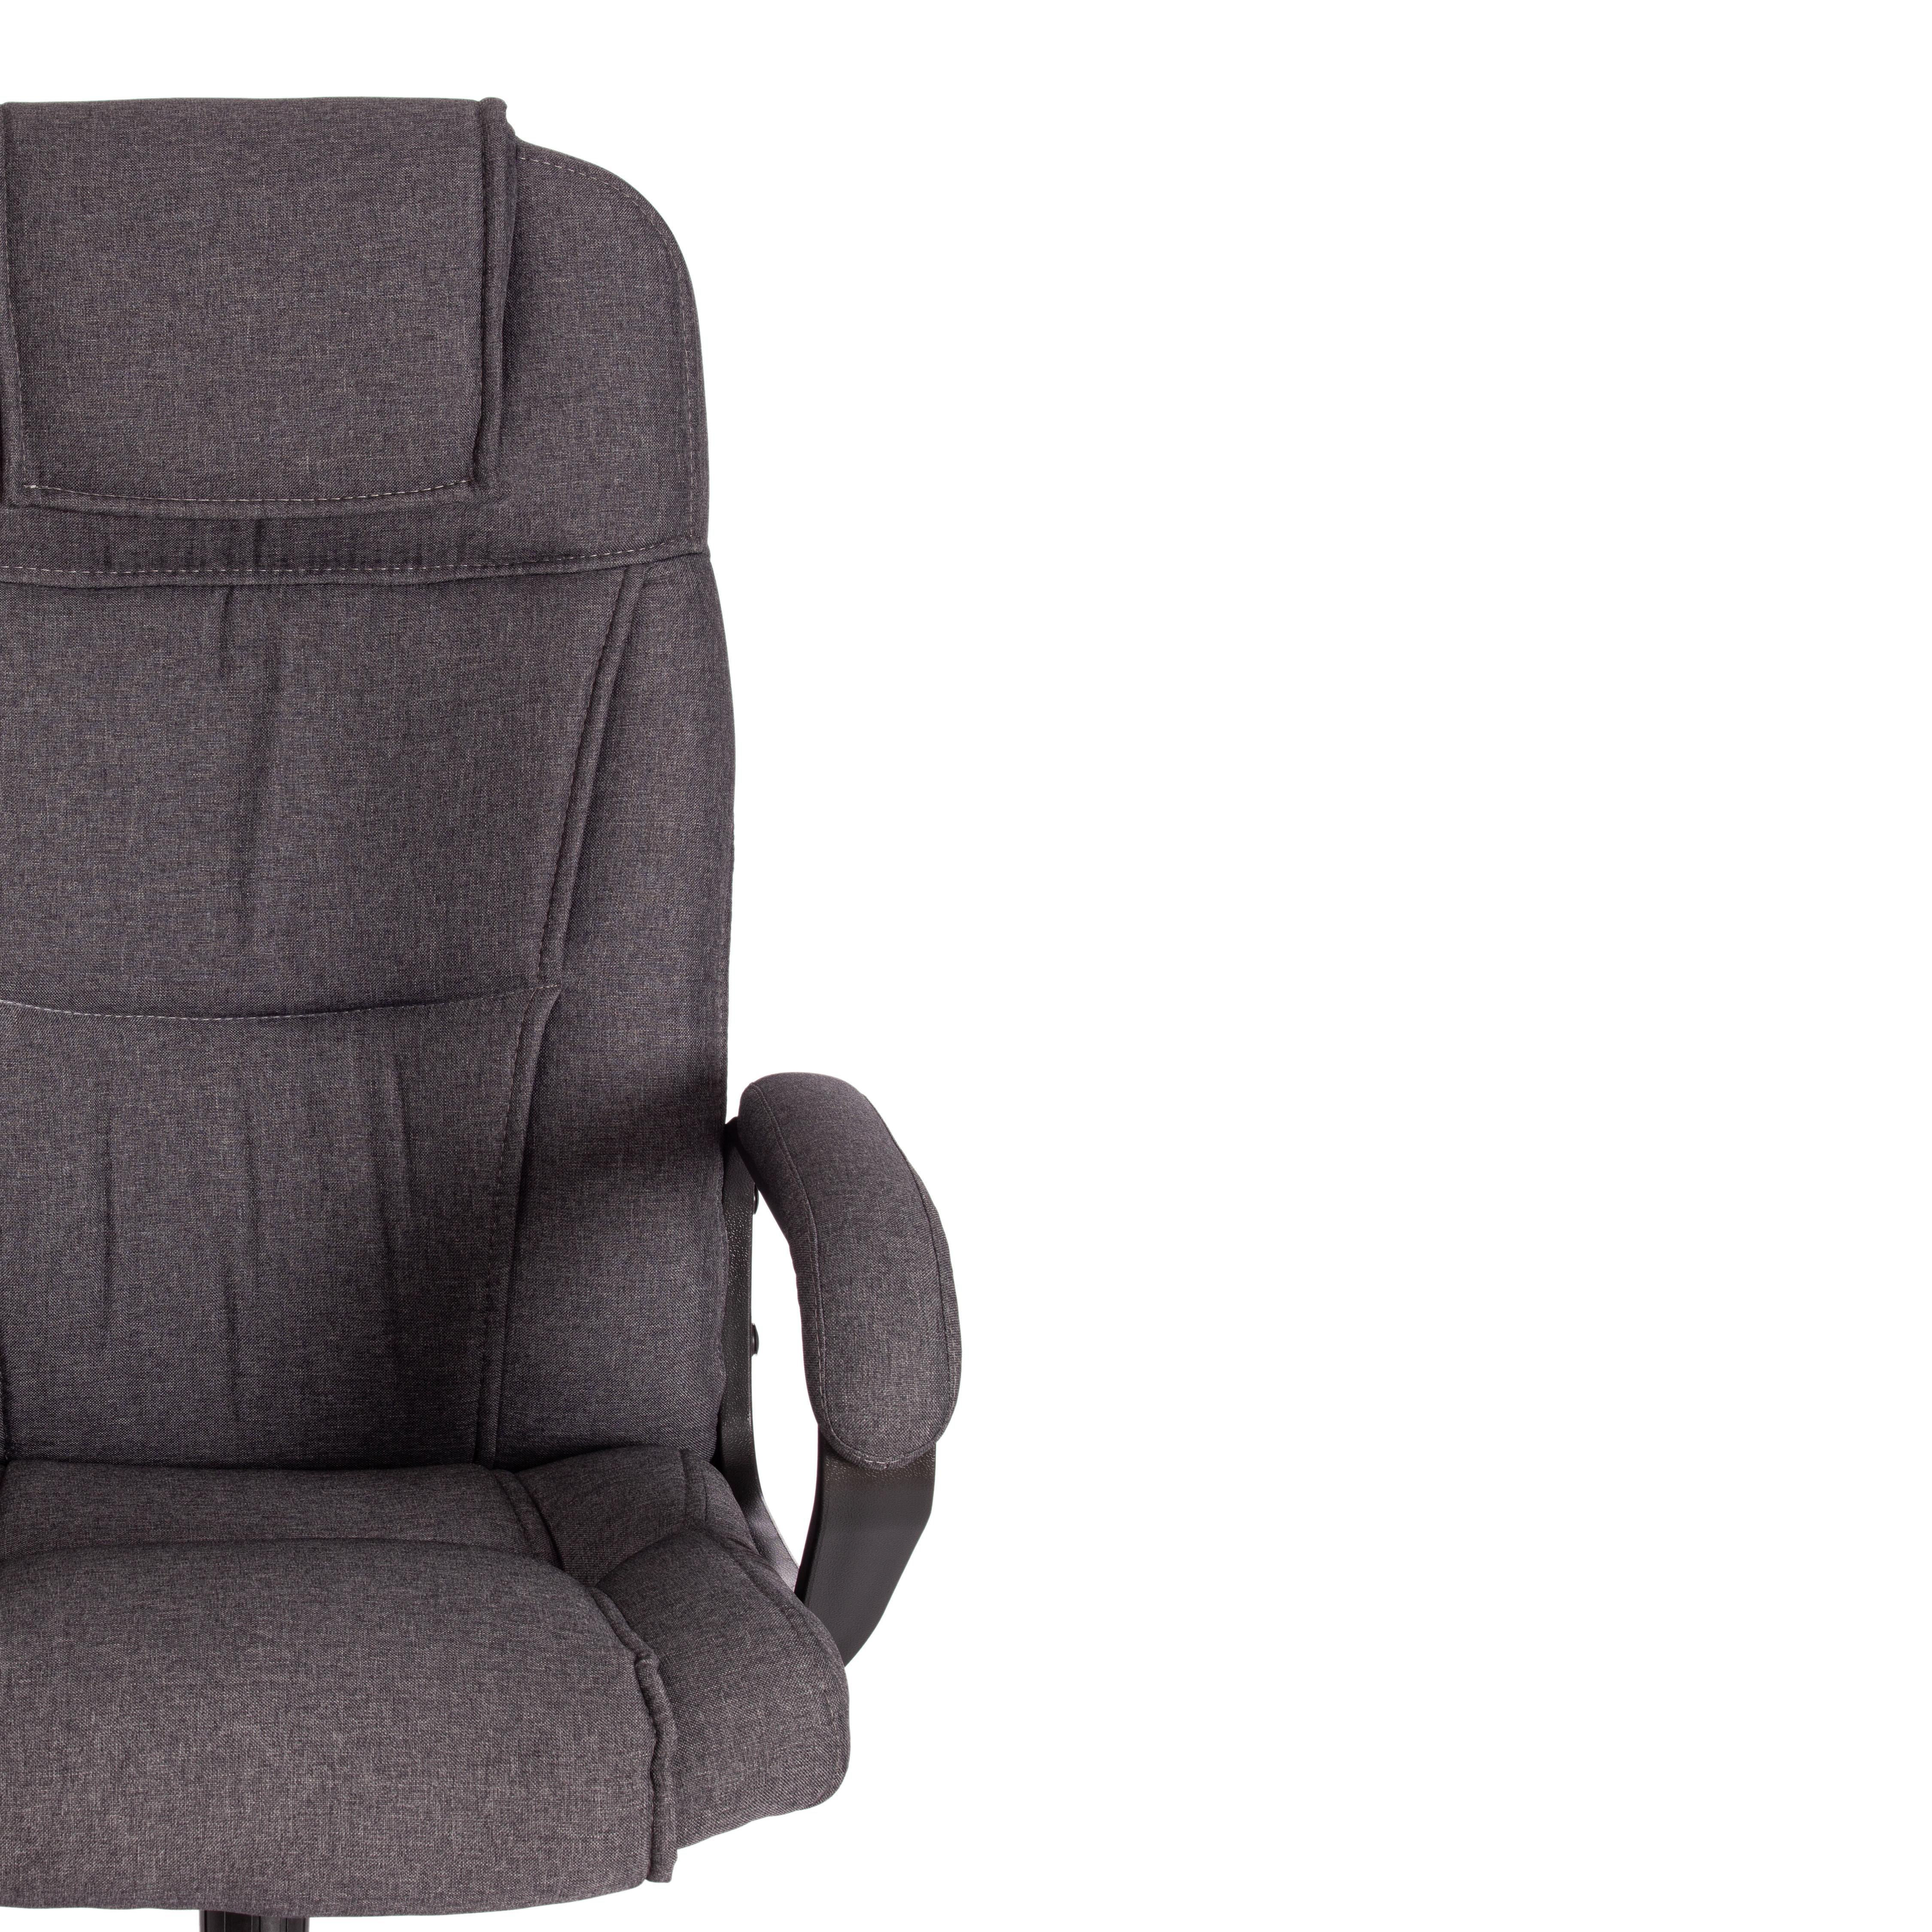 Кресло BERGAMO (22) ткань, темно-серый, F68